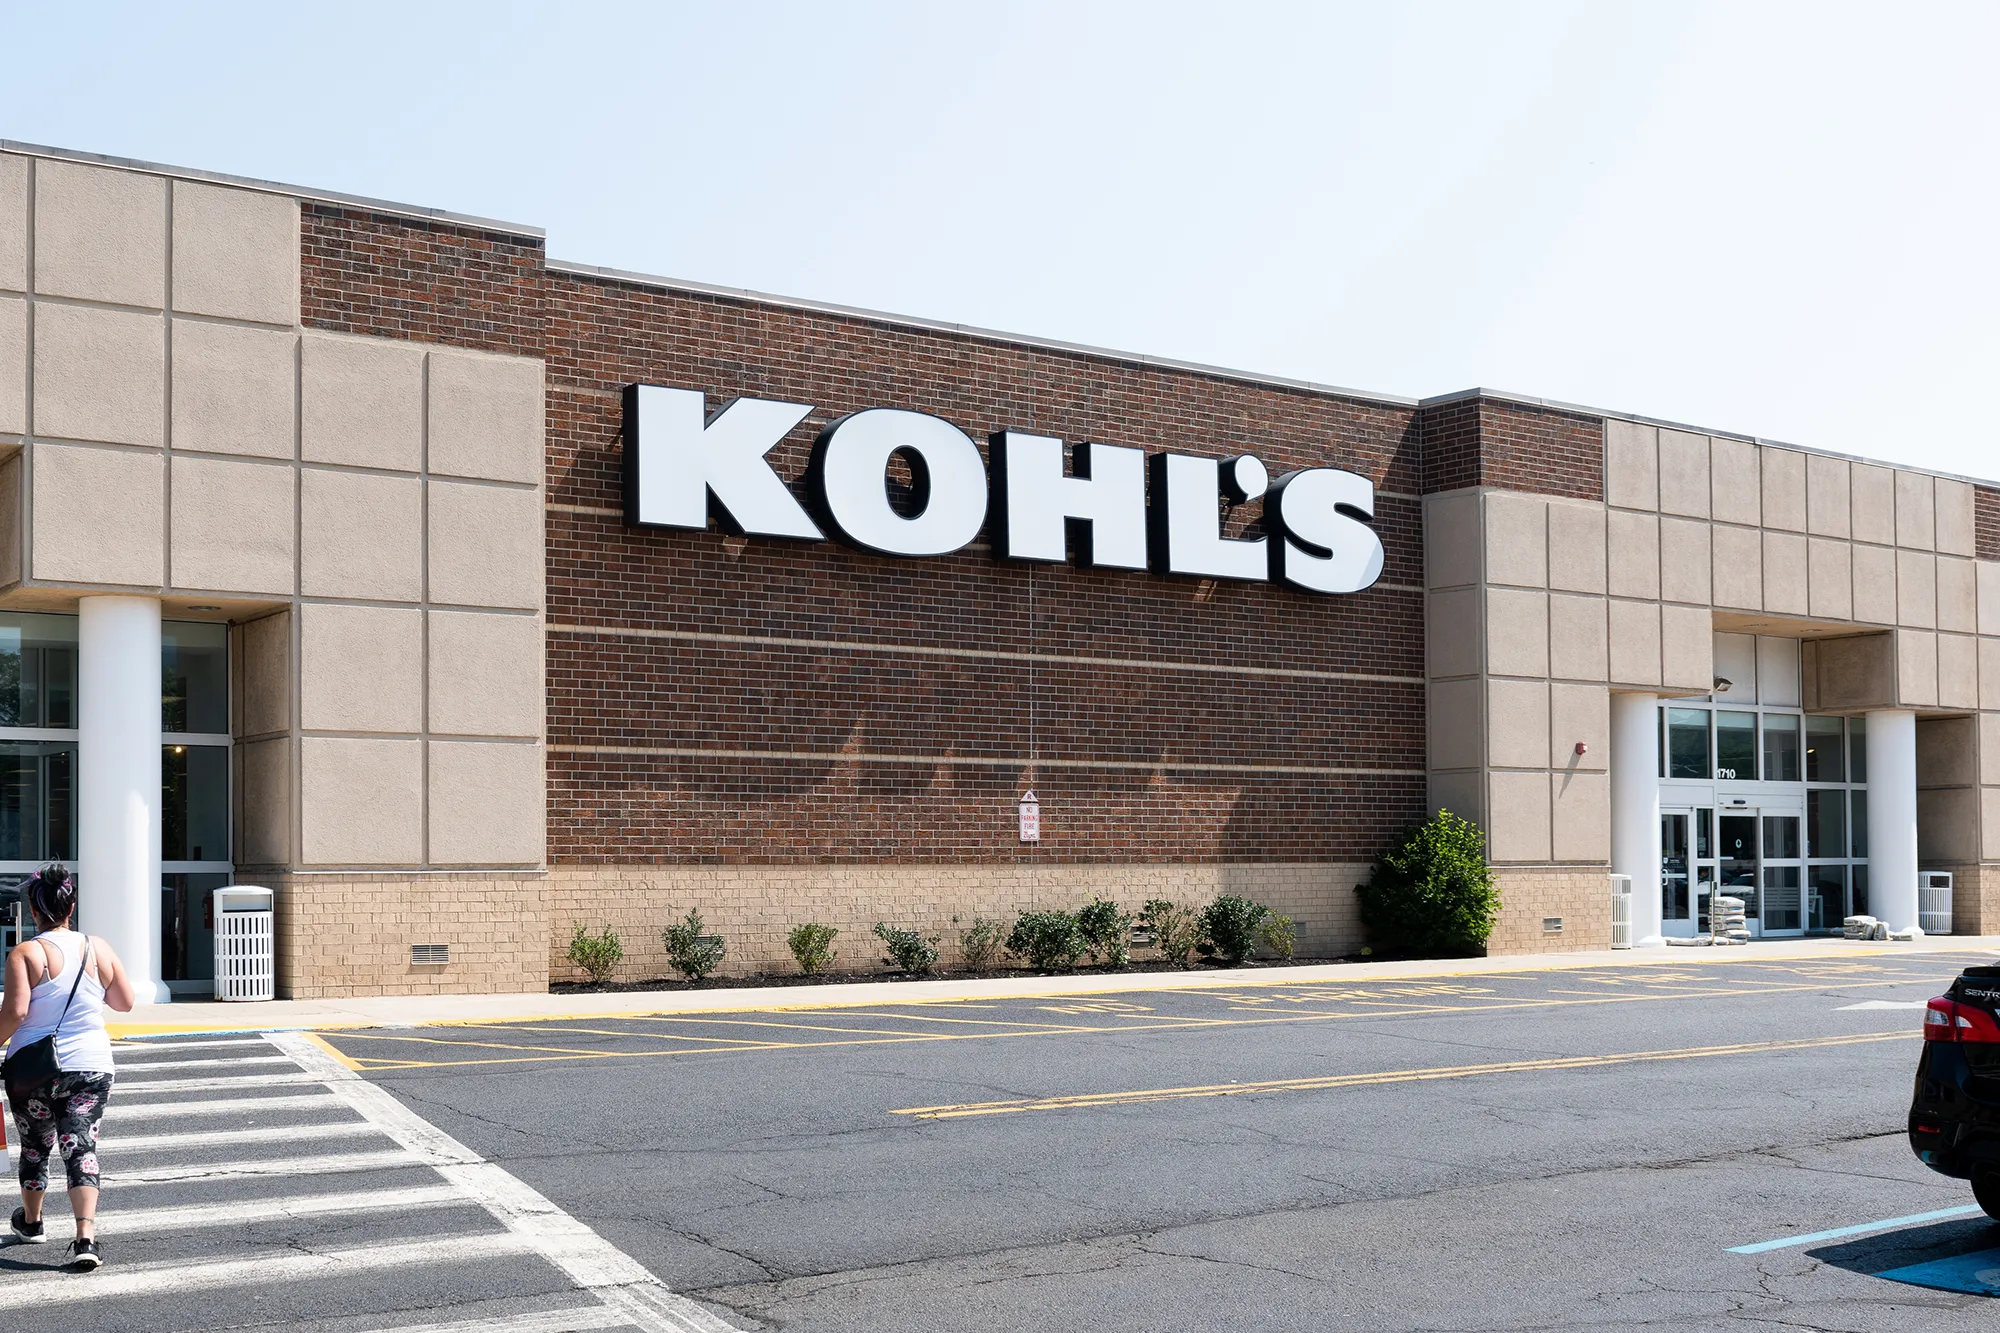 Kohlsfeedback.com - Win 10% OFF - Kohl's Customer Survey